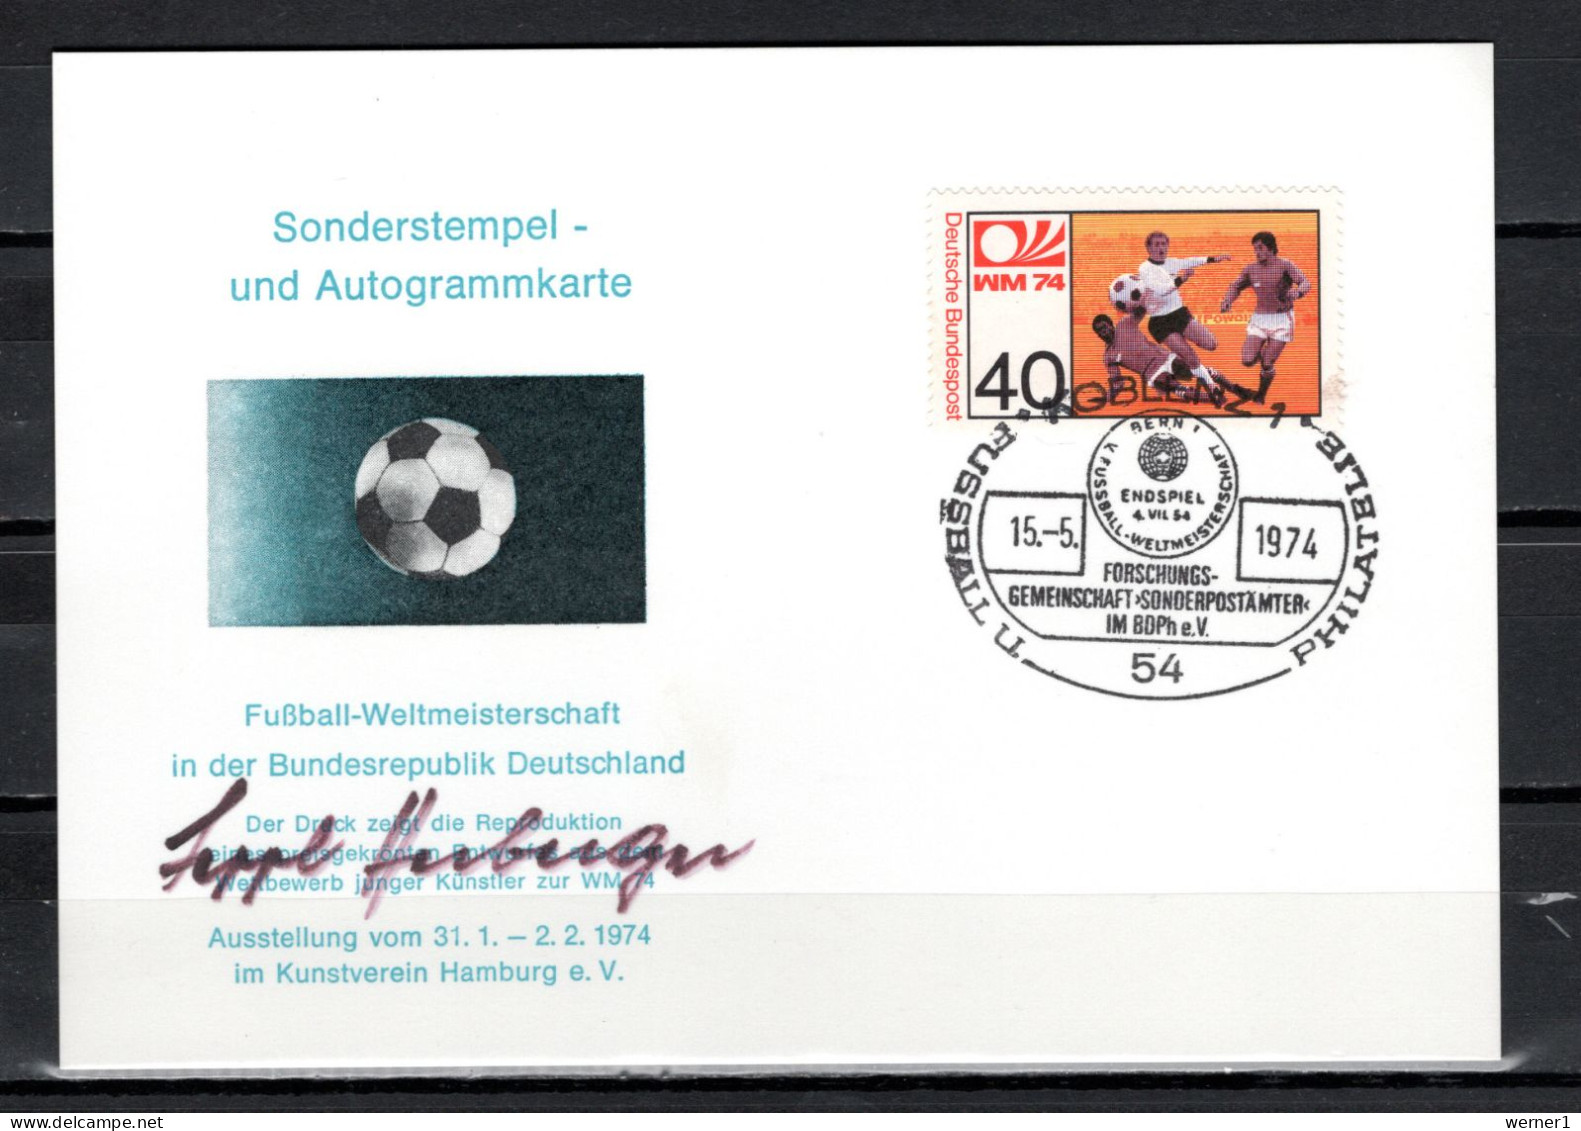 Germany 1974 Football Soccer World Cup Autograph Postcard With Original Signature Of Sepp Herberger - 1974 – Westdeutschland